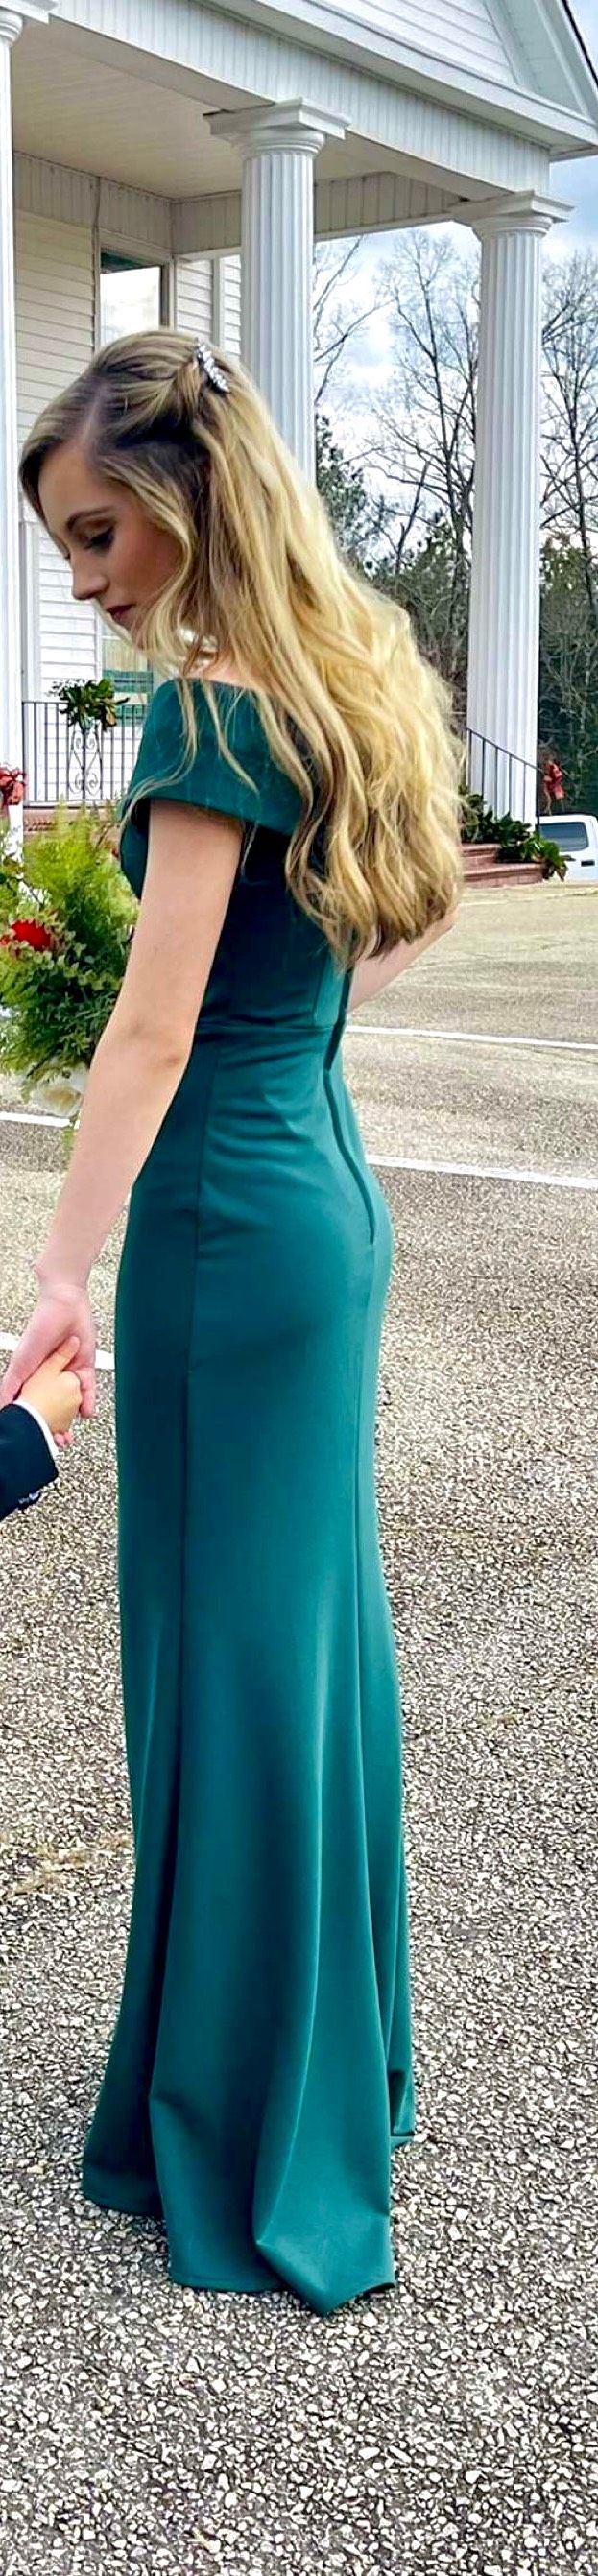 Allure Size 0 Prom Off The Shoulder Green Side Slit Dress on Queenly